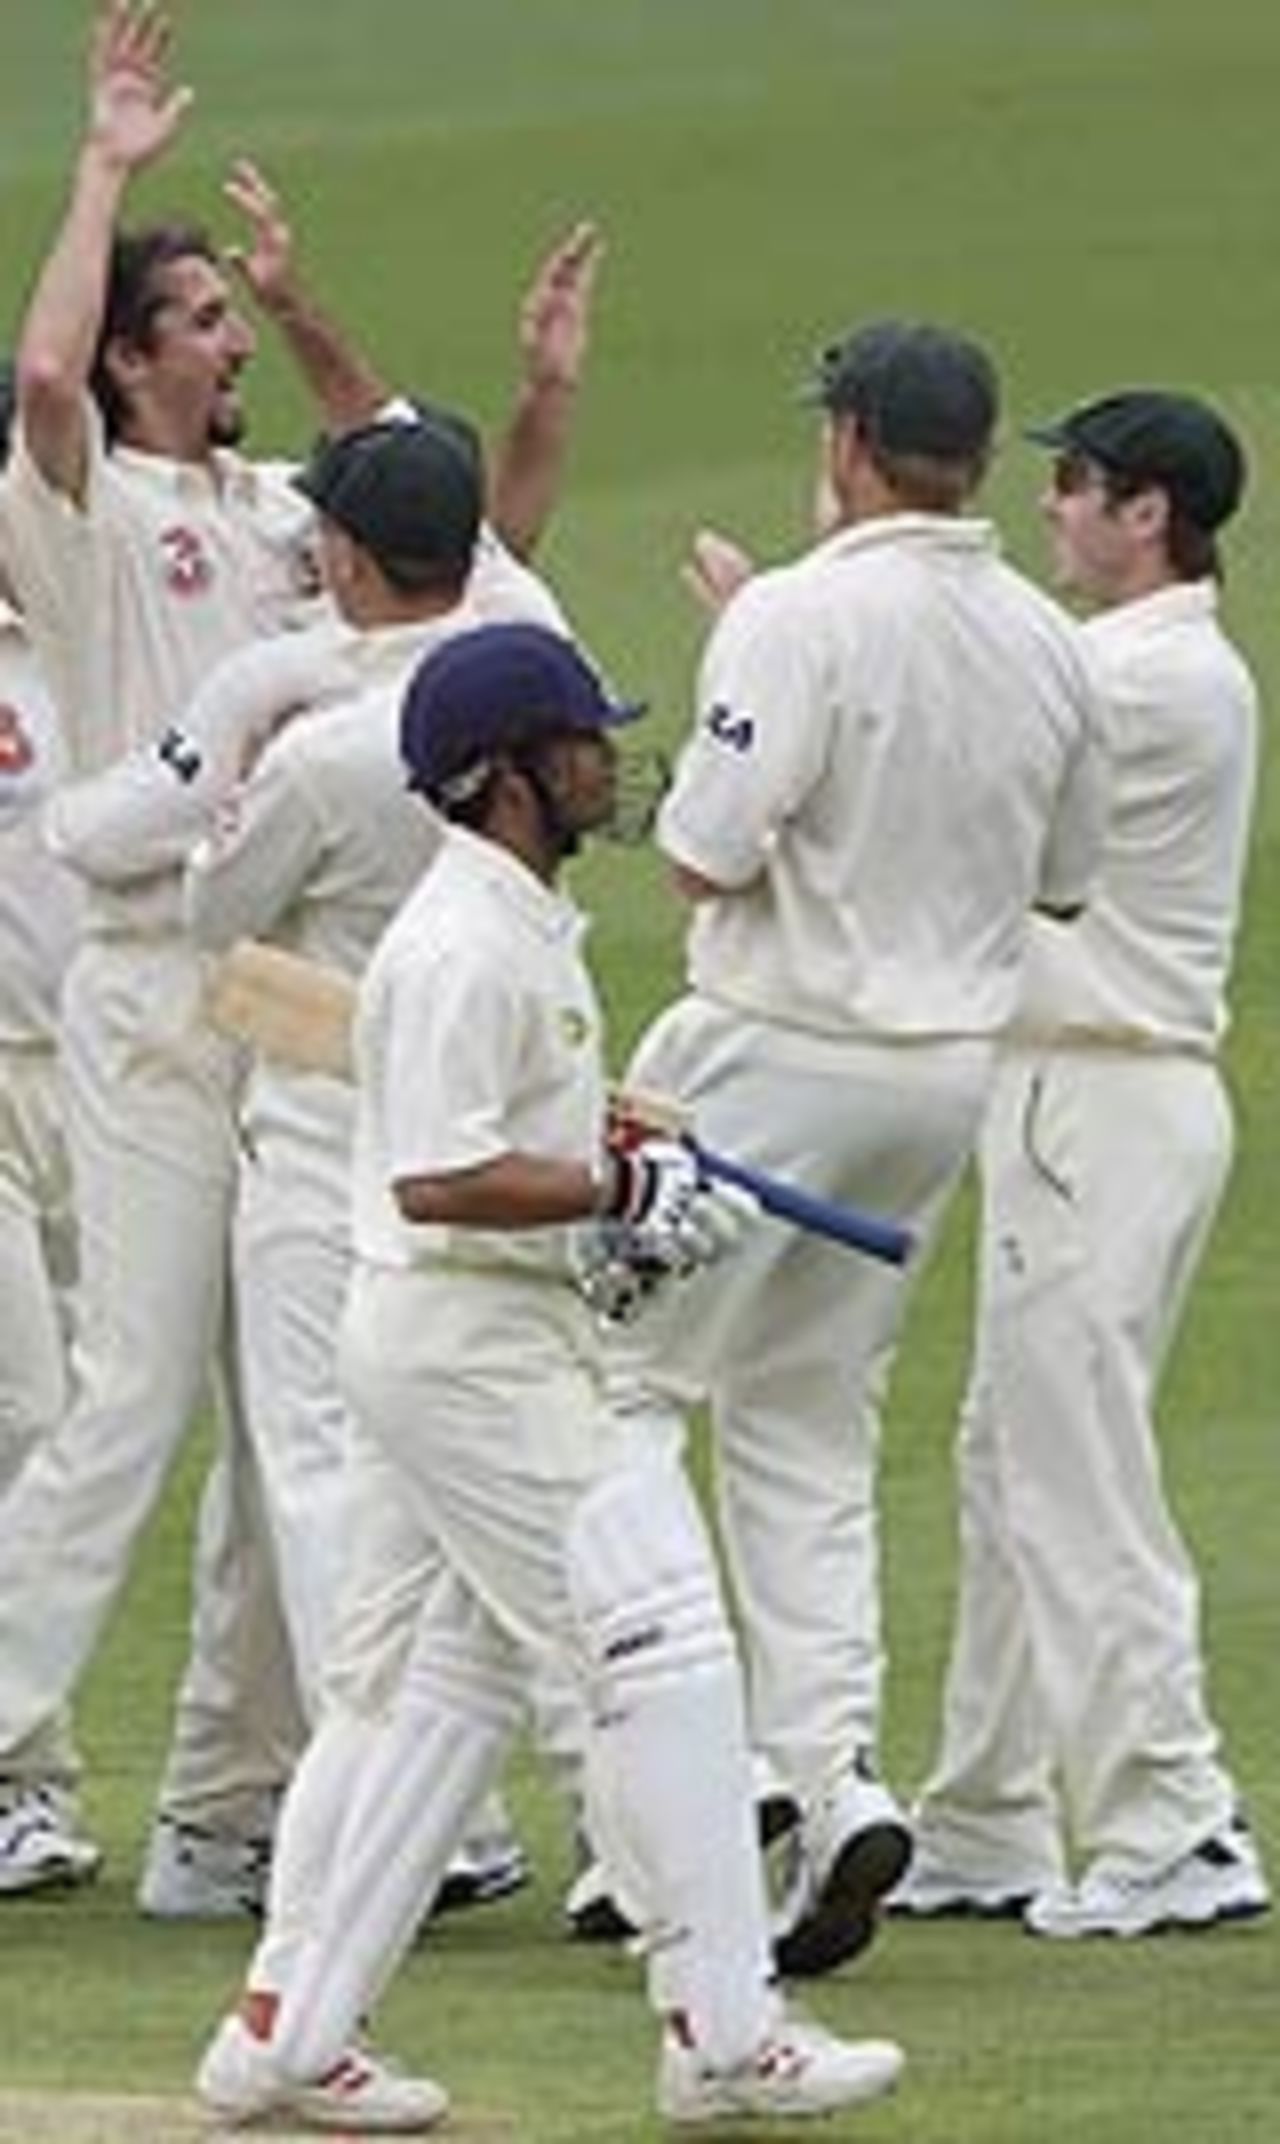 Sachin Tendulkar gets a rare duck, Australia v India, 1st Test, Brisbane, 4th day, December 7, 2003